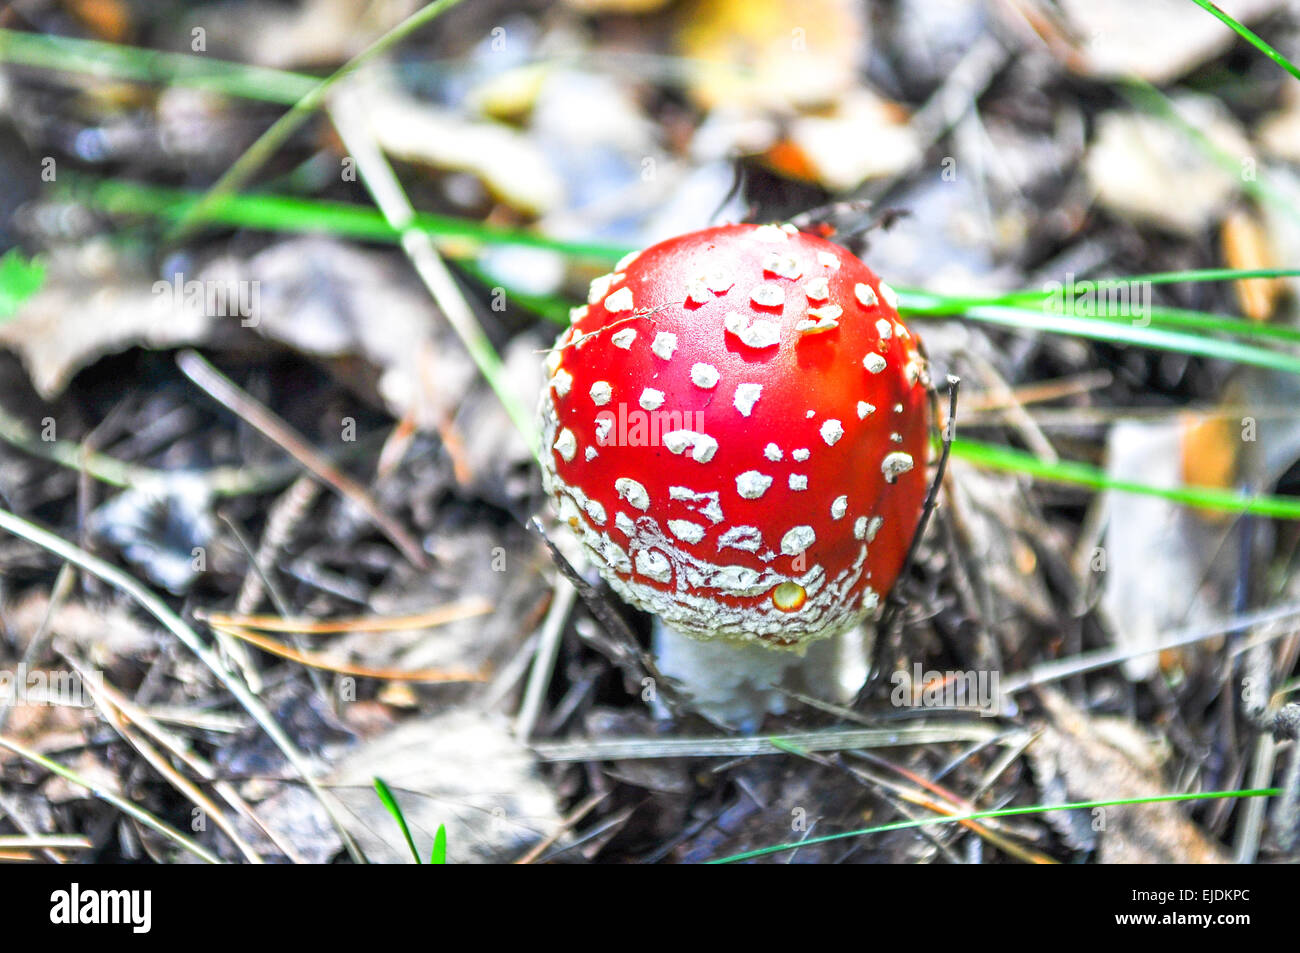 the little  amanita mushroom in natural habitat Stock Photo